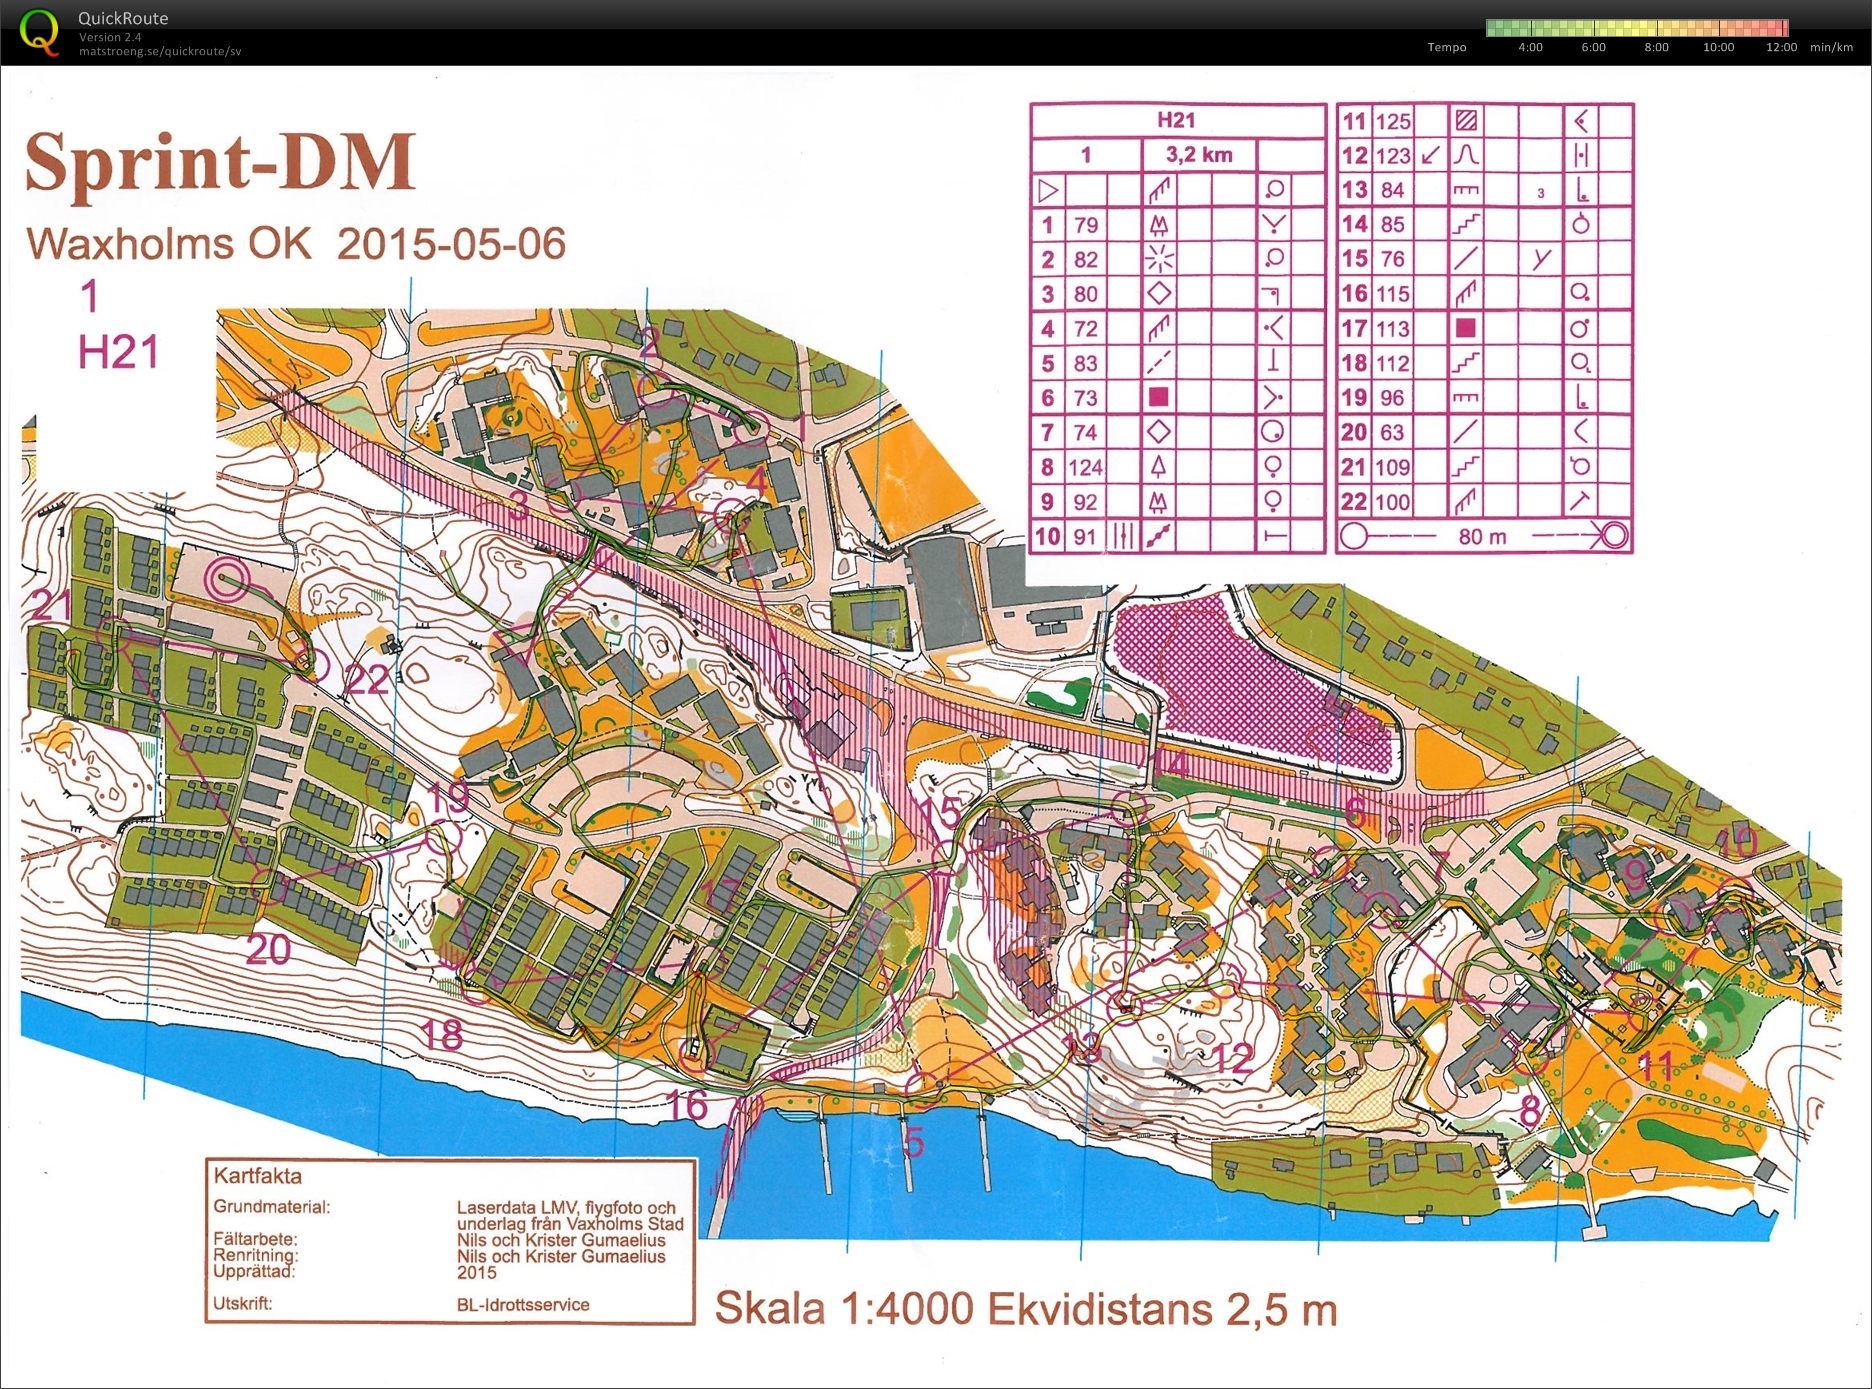 DM sprint Stockholm (H21) (2015-05-06)